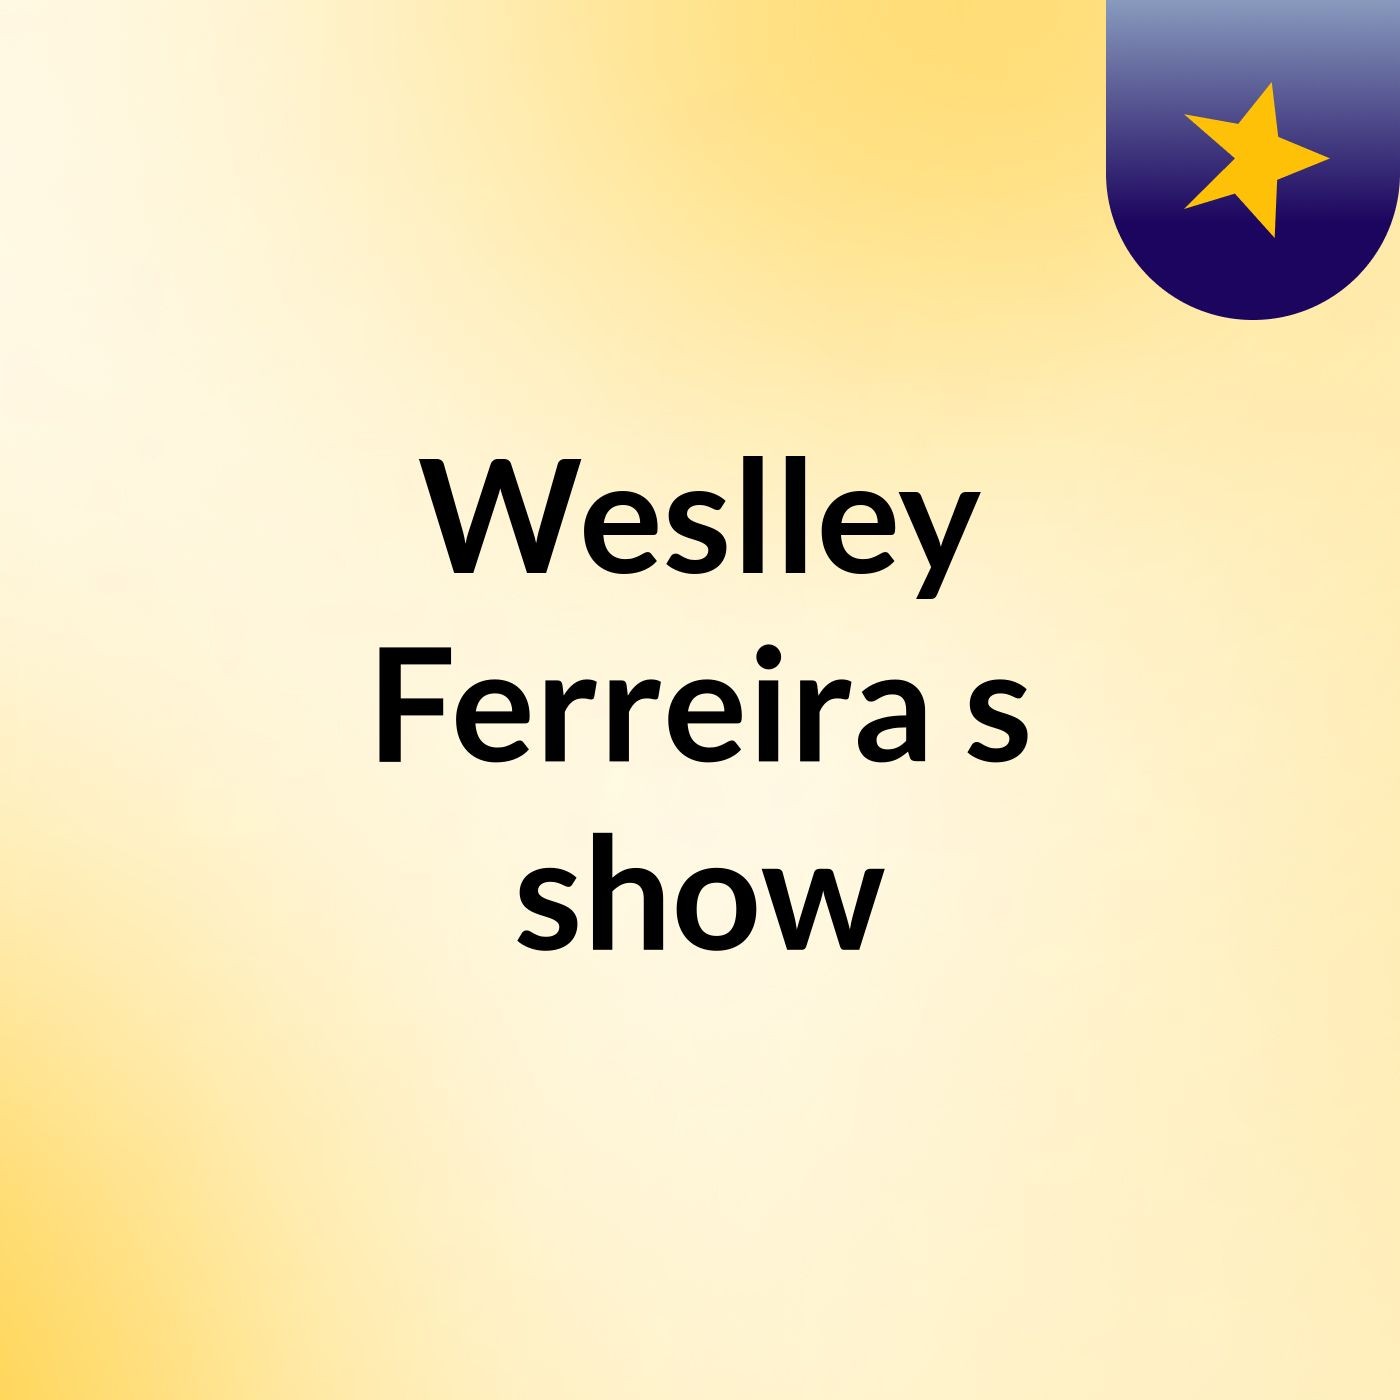 Weslley Ferreira's show